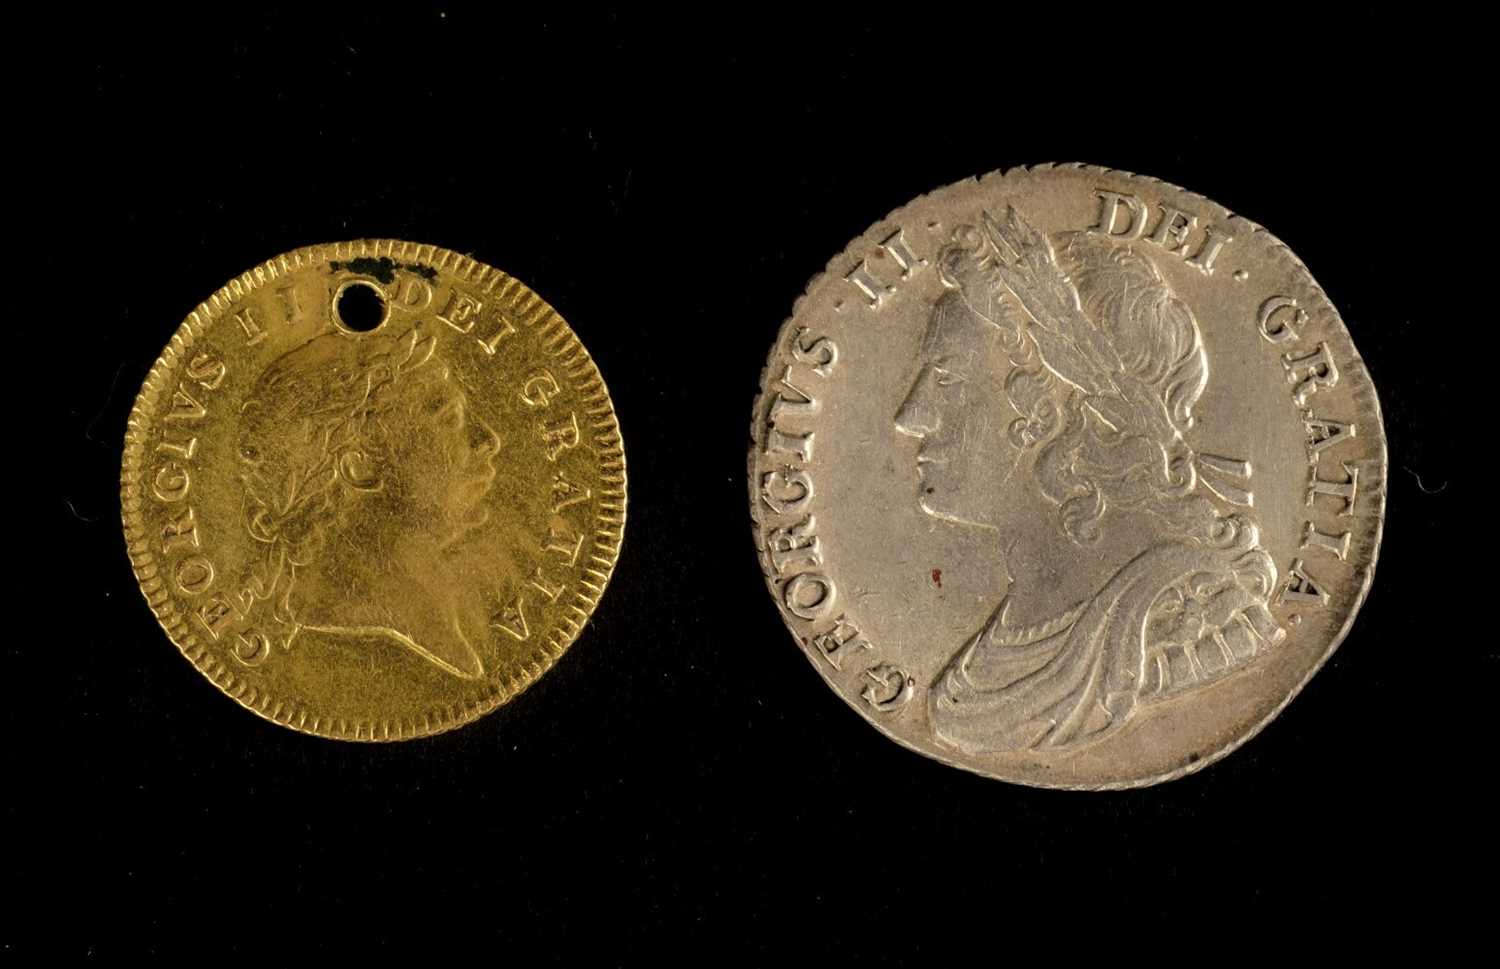 Lot 198 - Coins. A George III gold half guinea, 1804 plus George II shilling, 1734